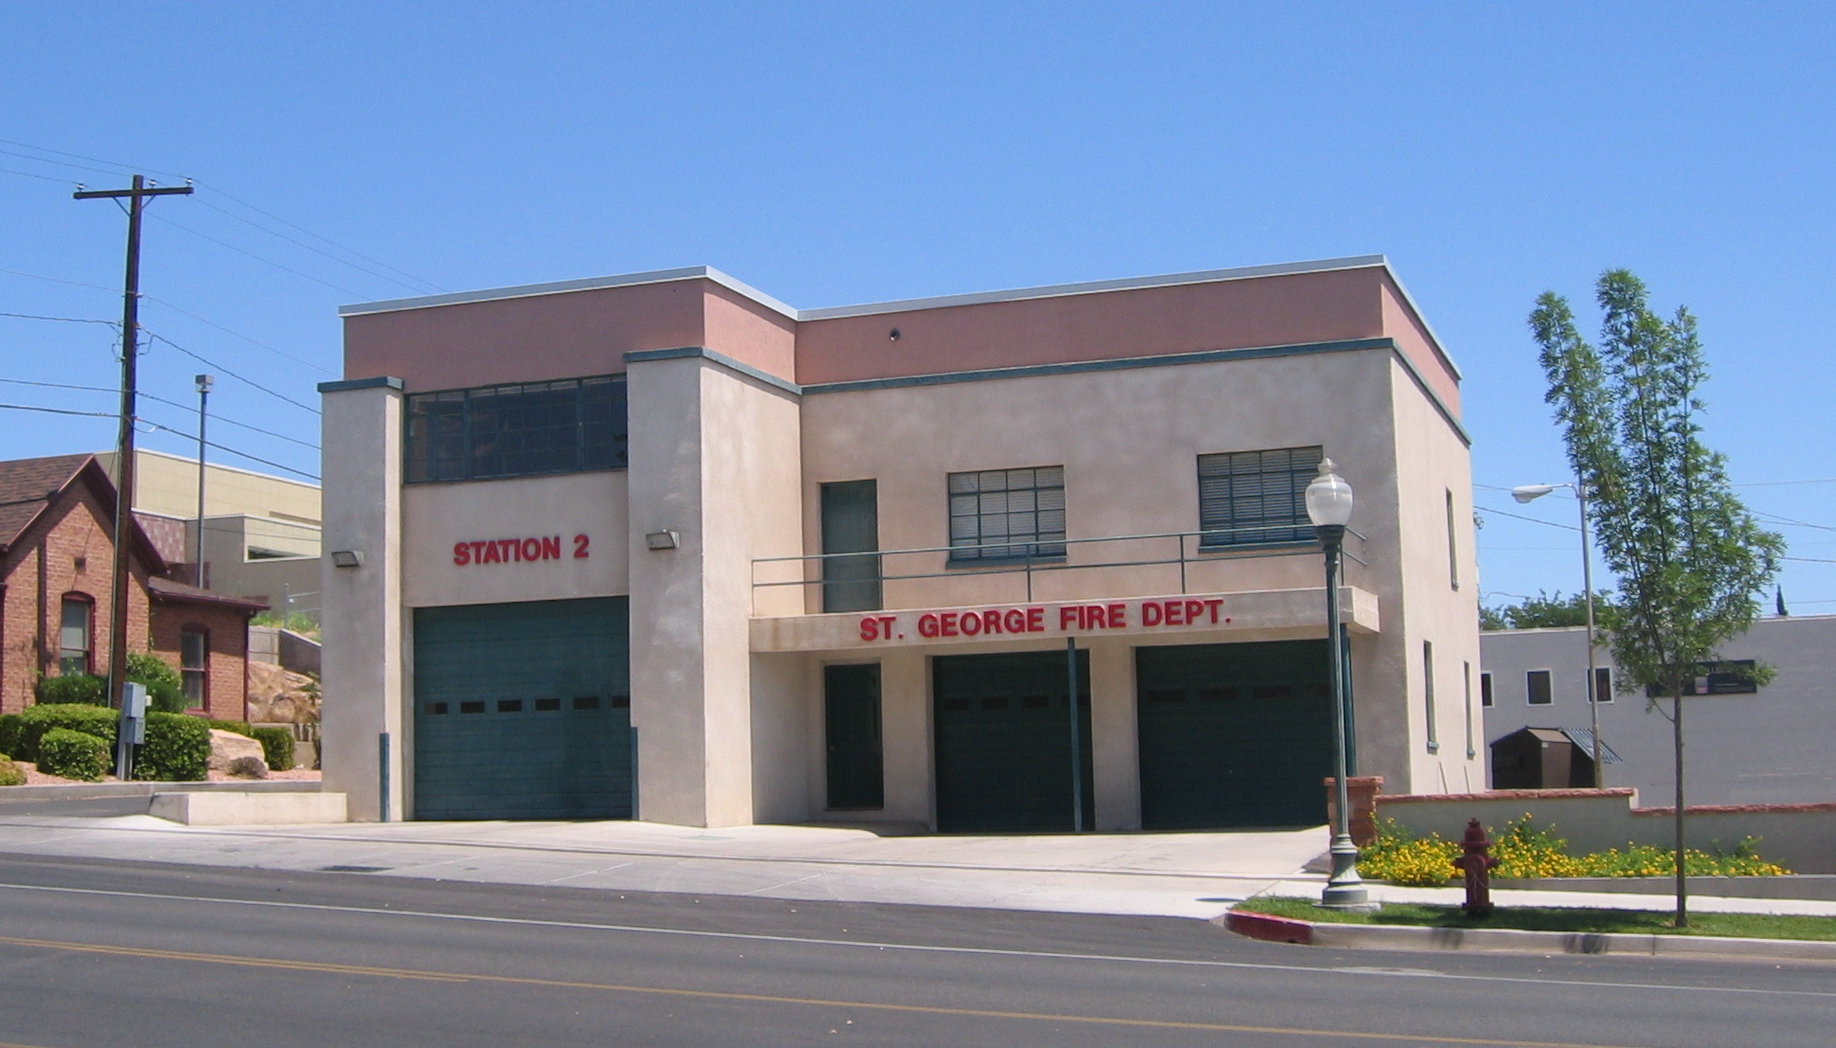 WCHS-00182 St. George Fire Station #2